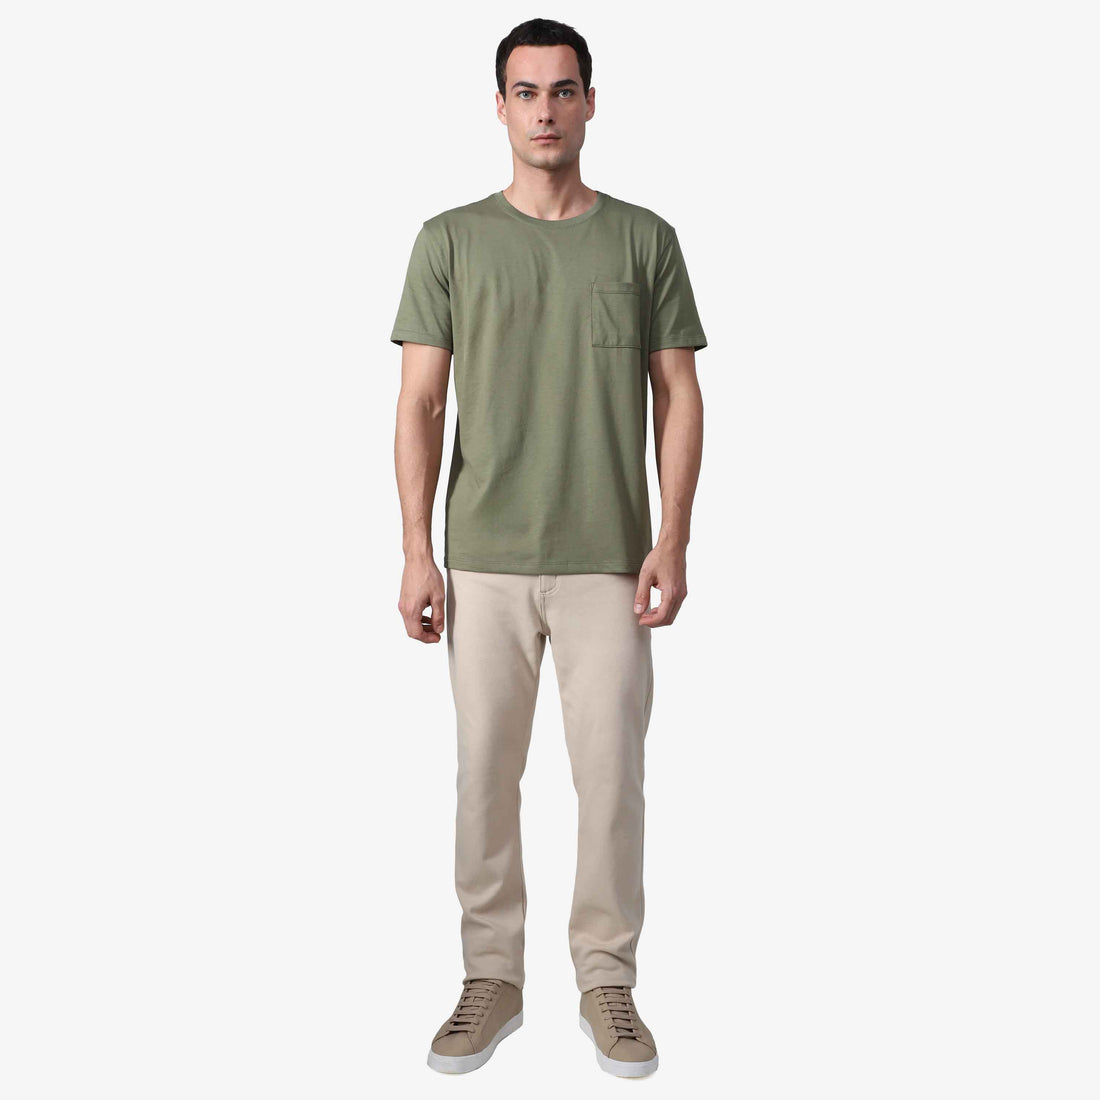 Camiseta Pima Bolso Masculina | Life Collection - Verde Militar